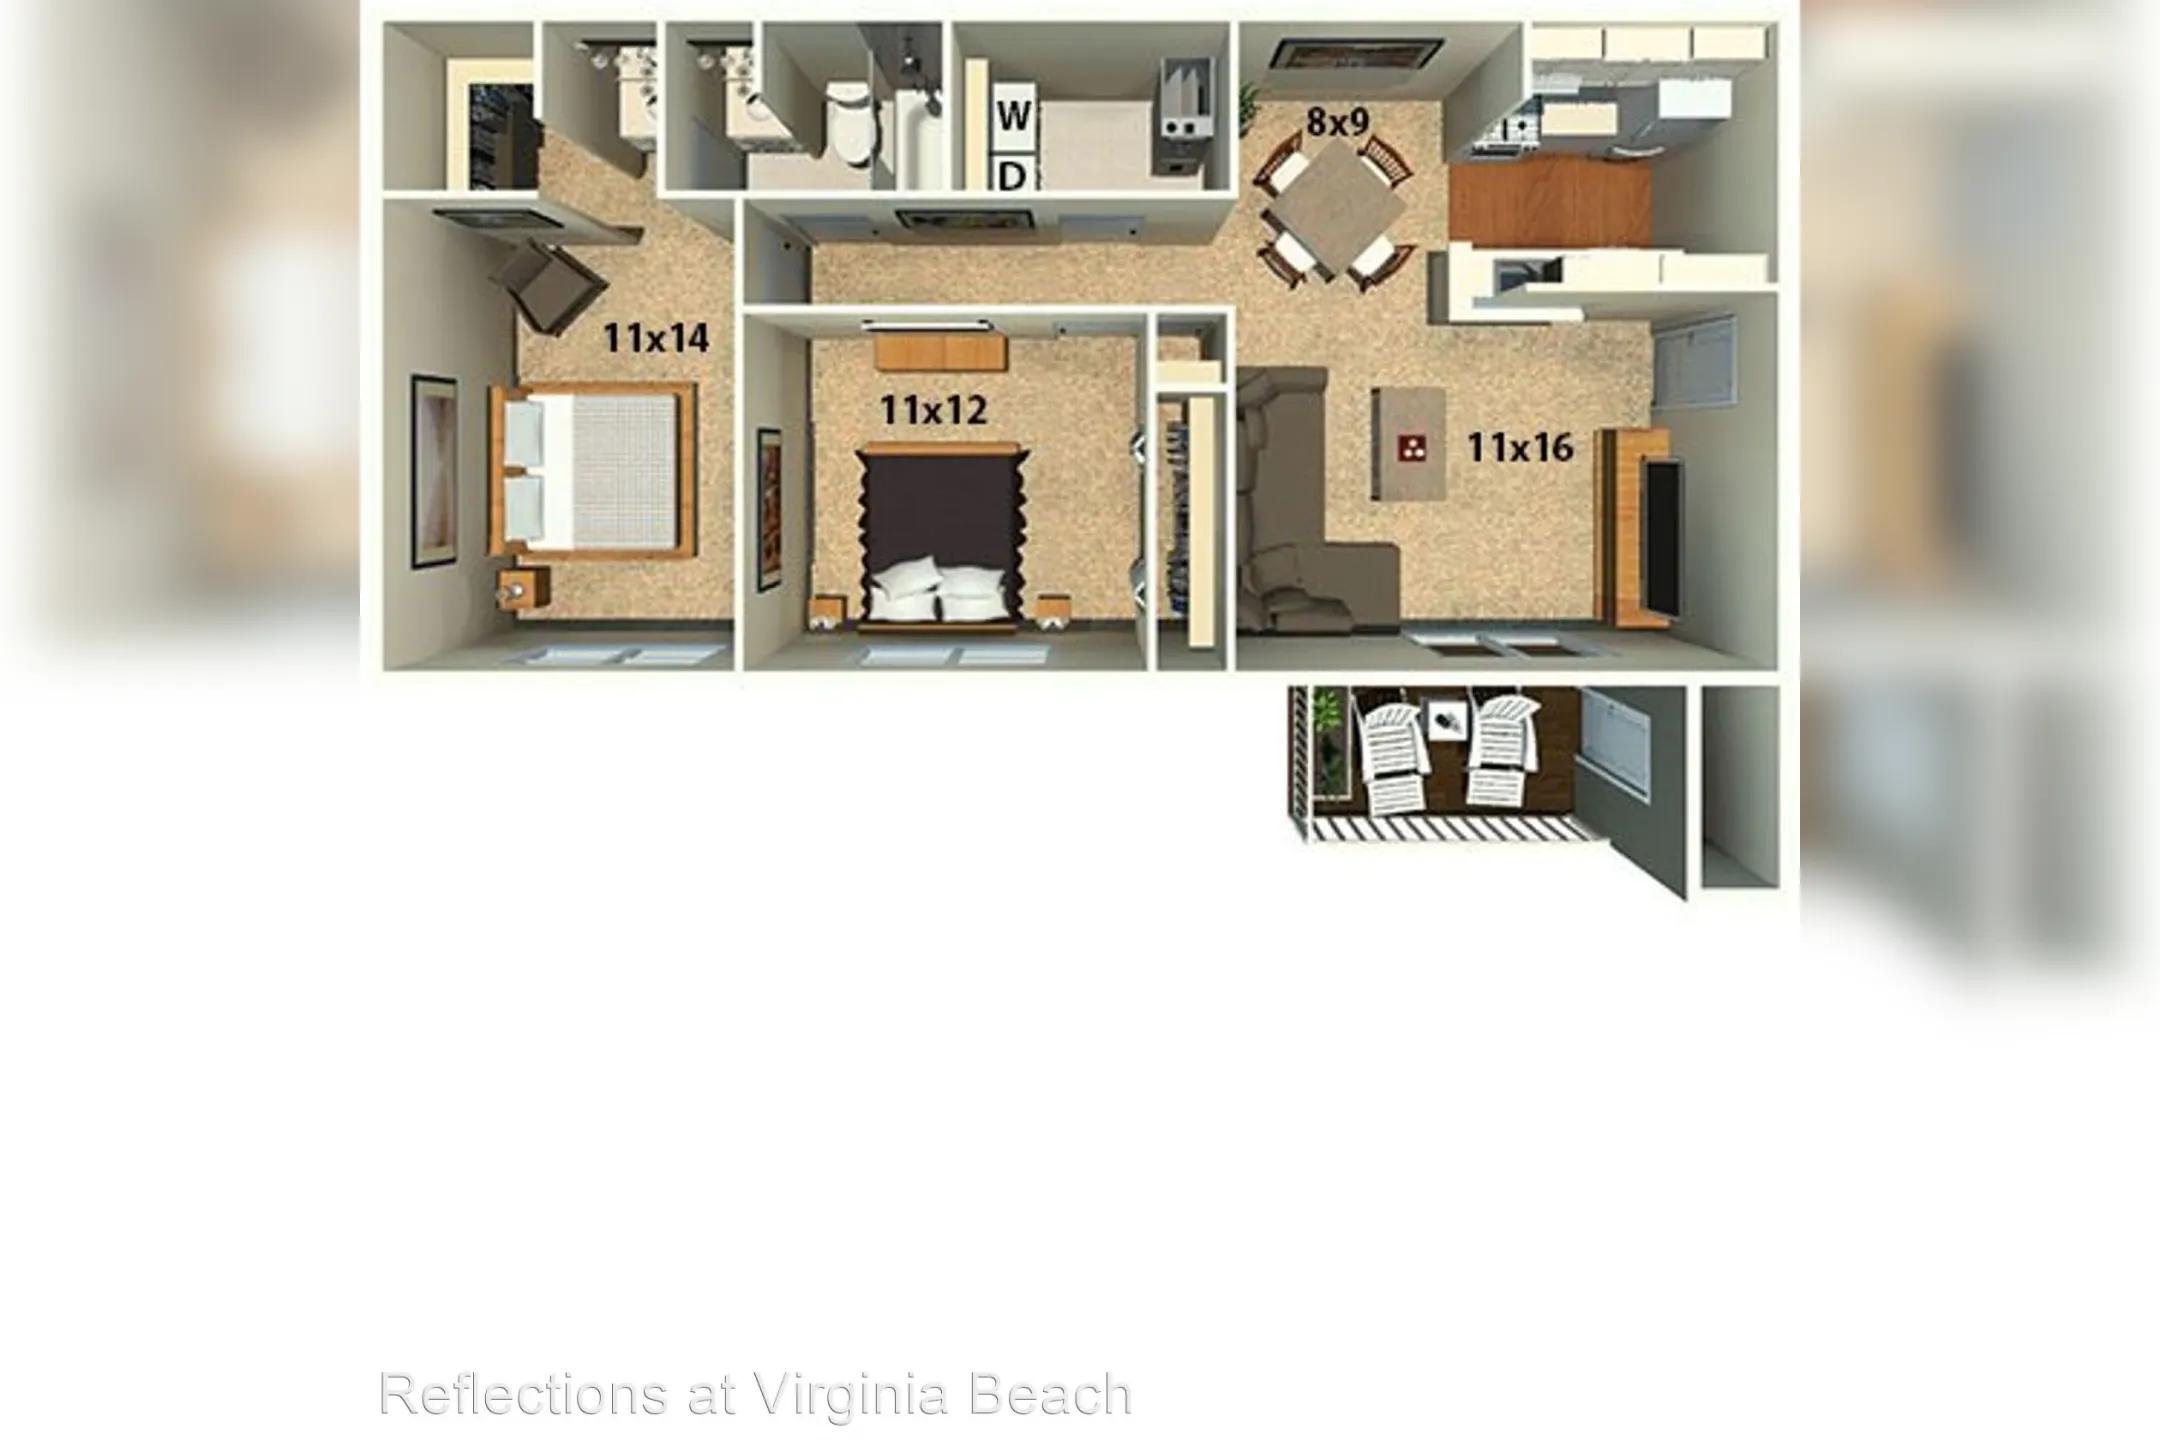 Reflections at Virginia Beach - Virginia Beach, VA